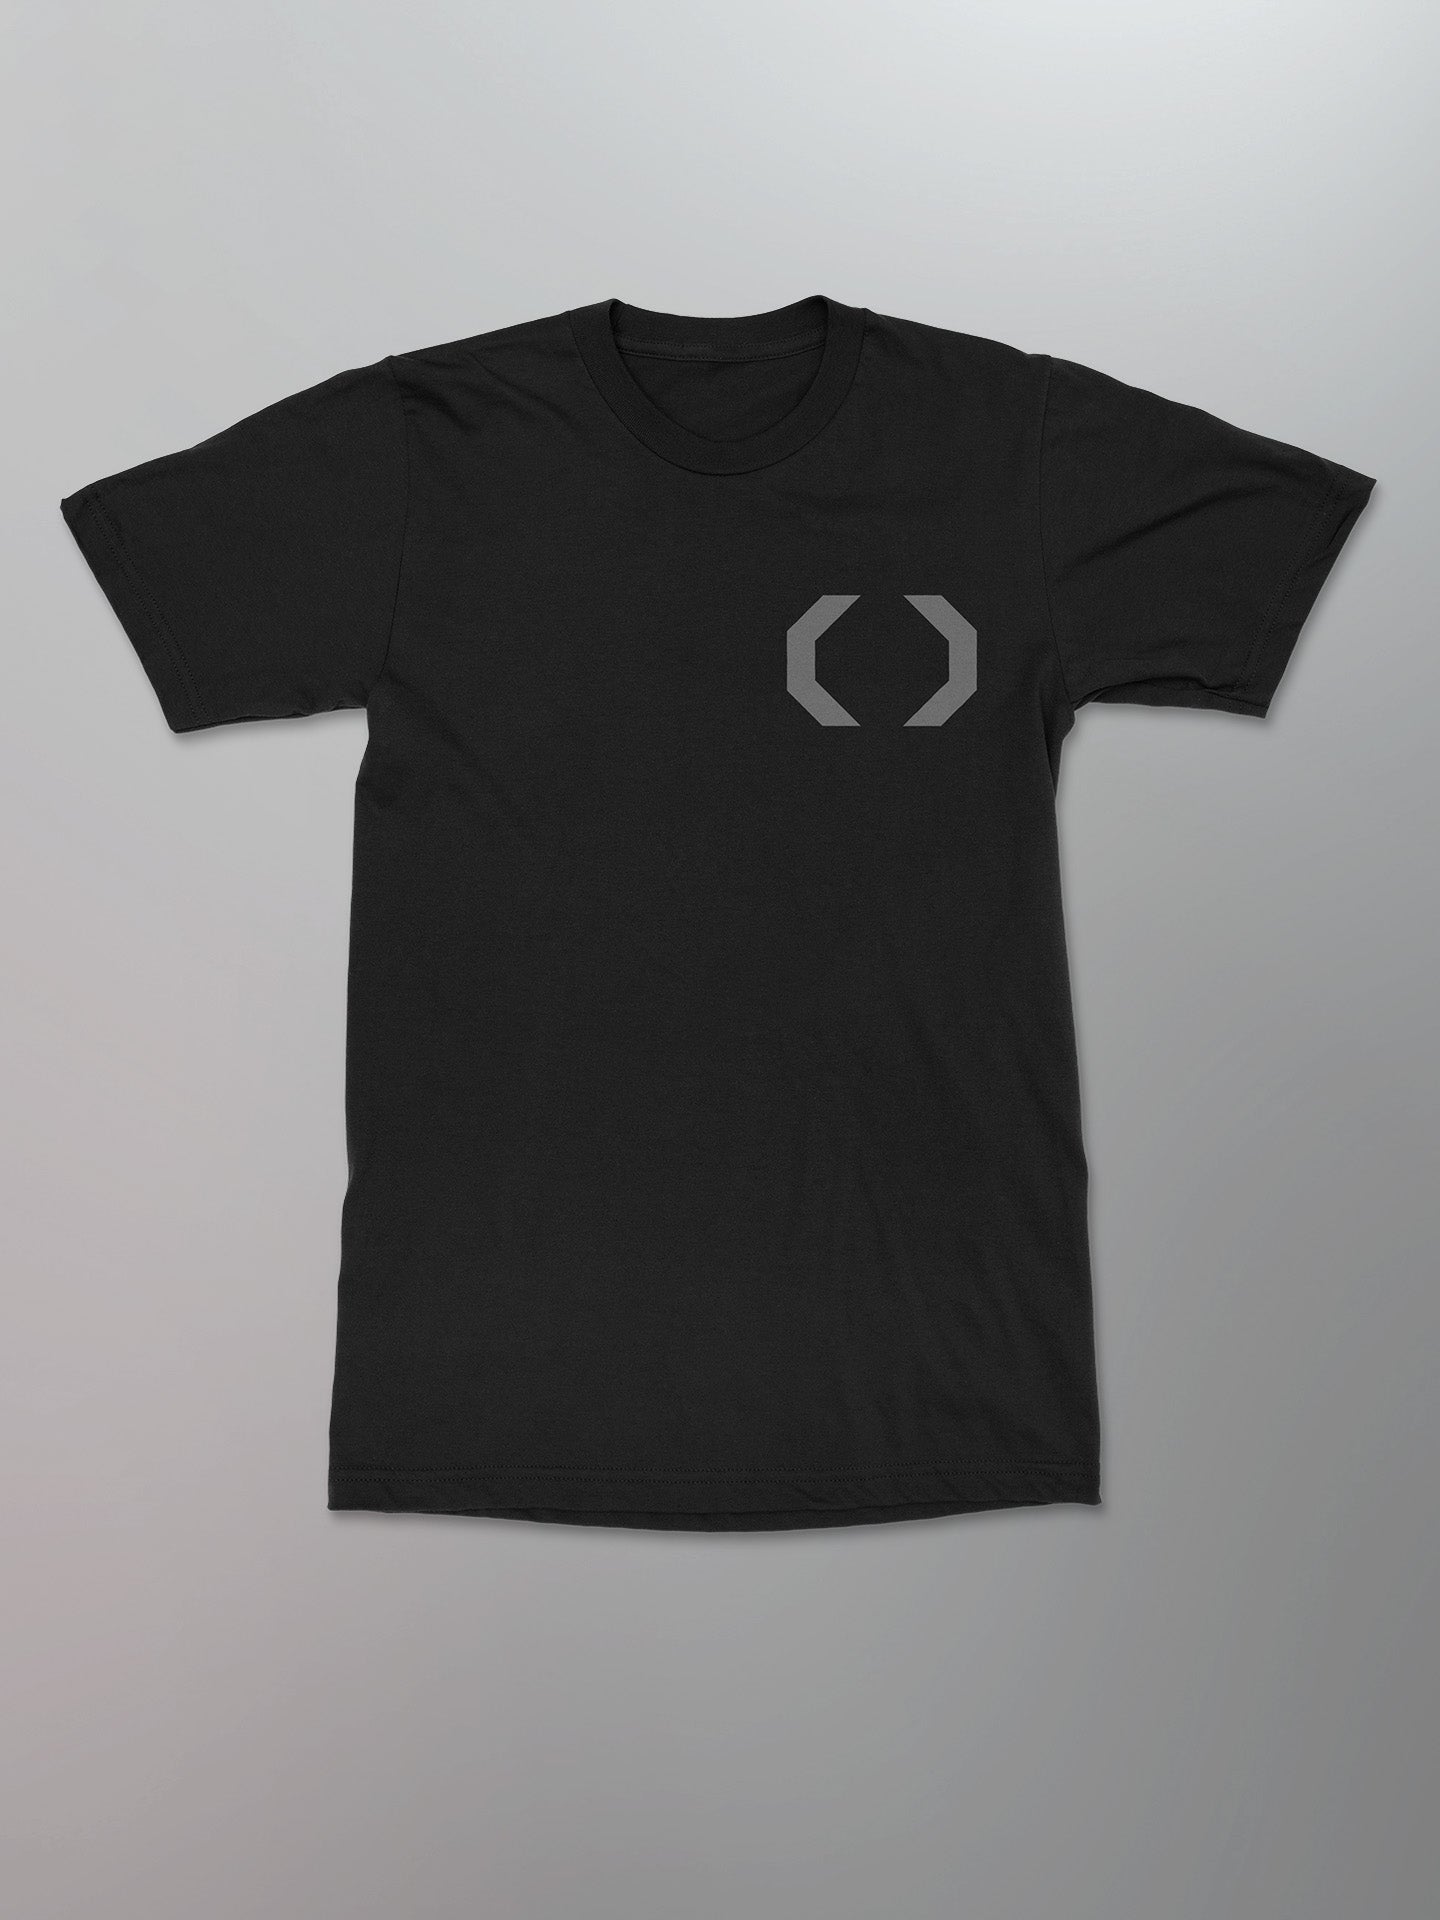 Celldweller - Low-Key Logo Shirt